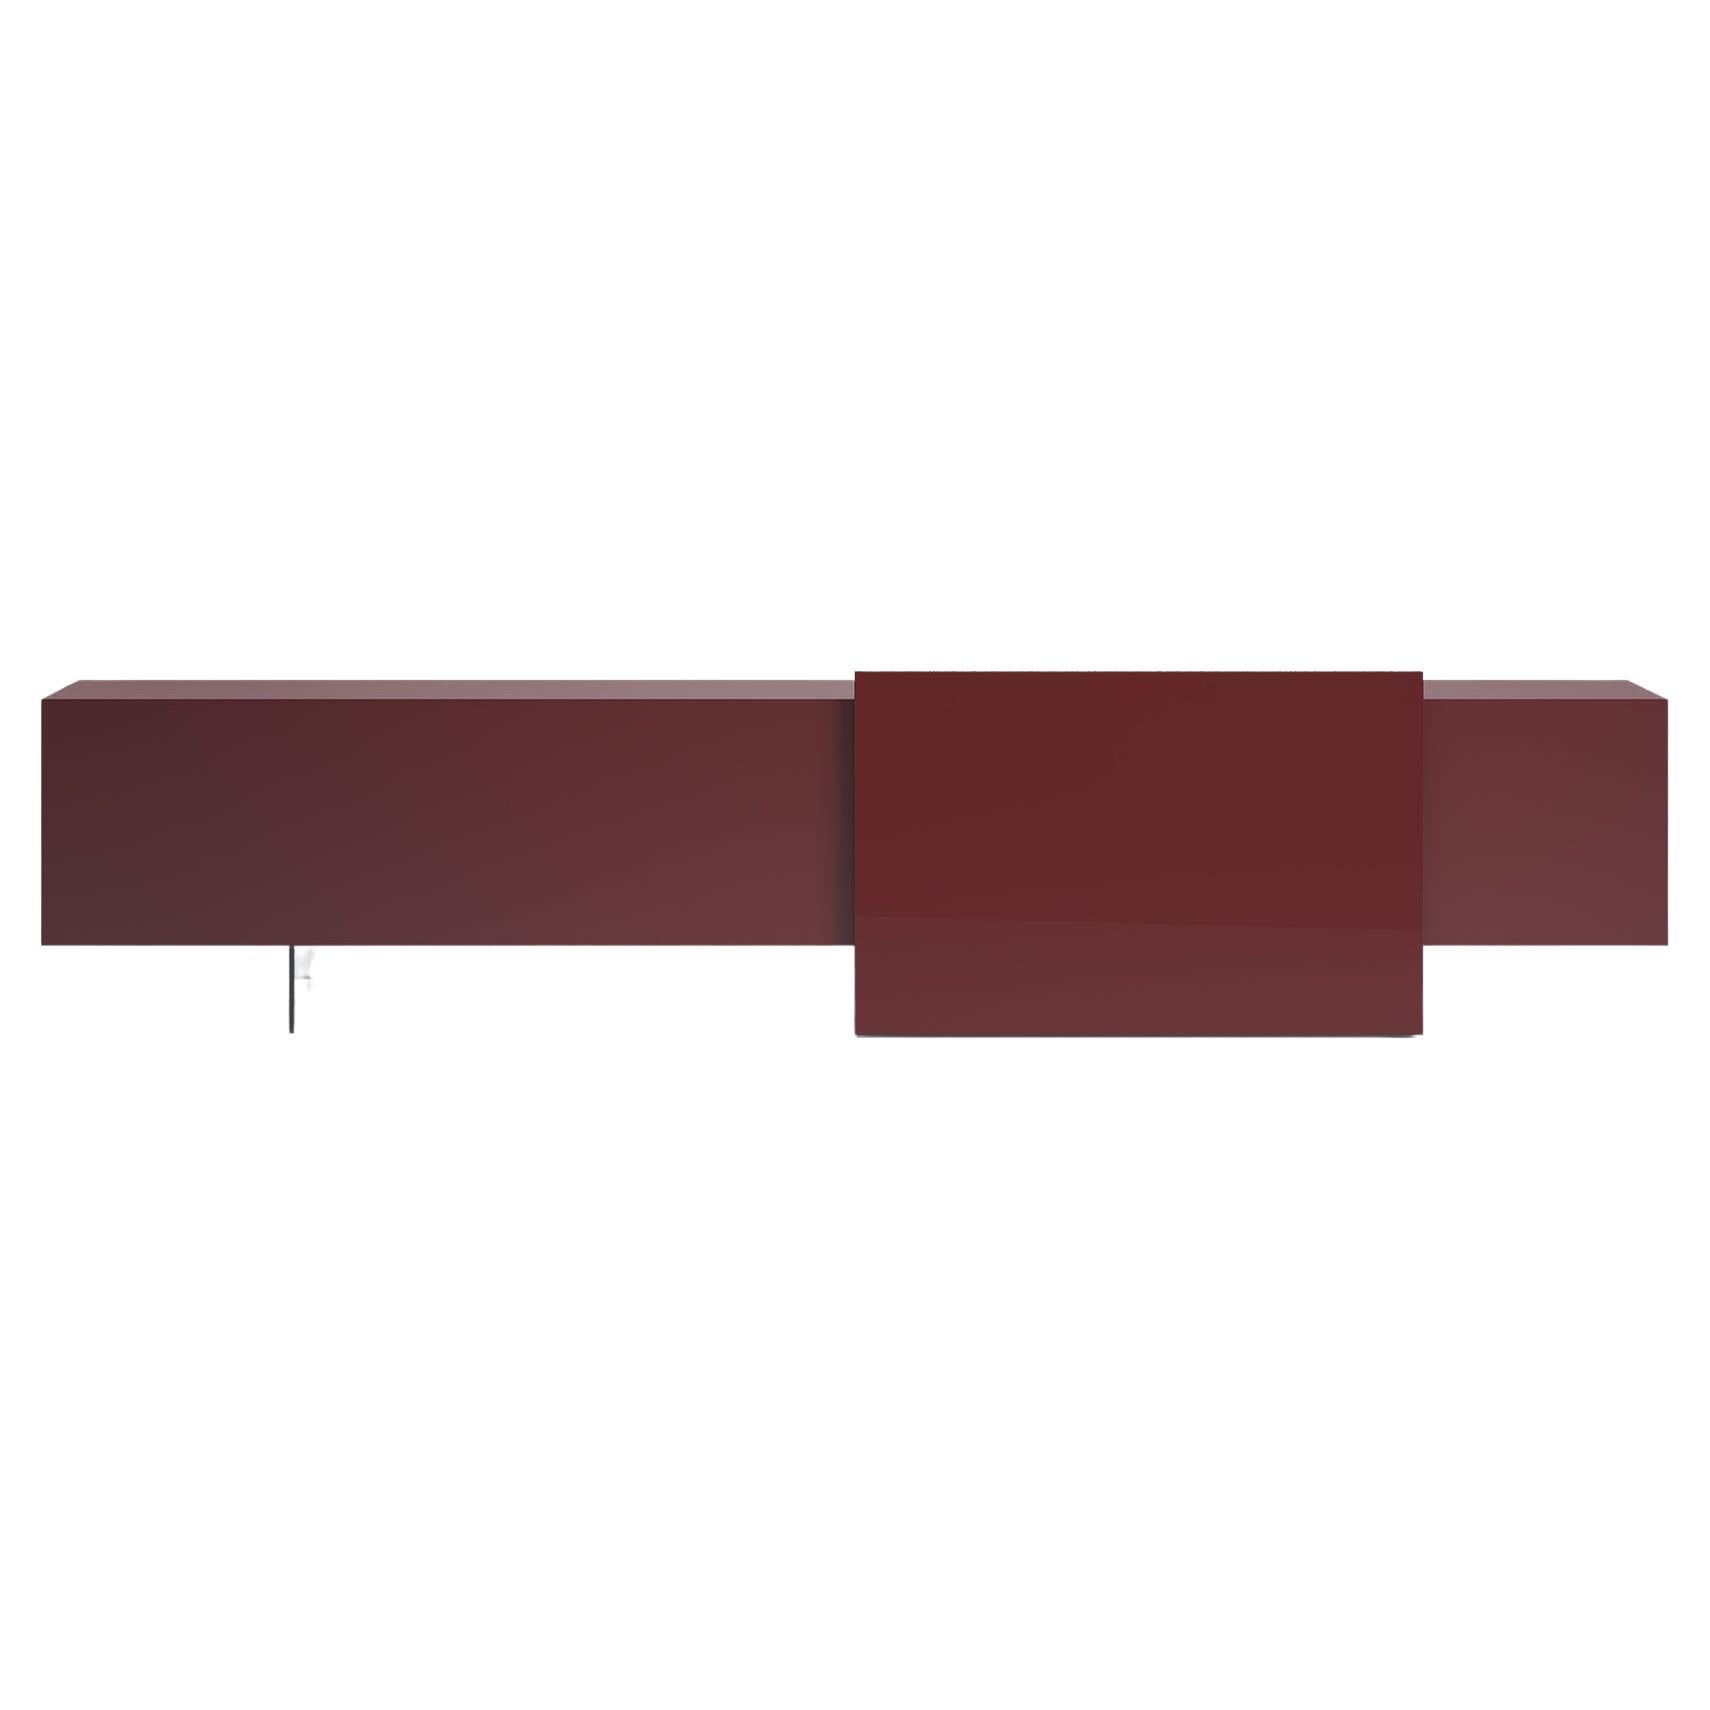 Acerbis Alterego Low Credenza in Matt Brick Red & Glossy Lacquered Burgundy Door For Sale